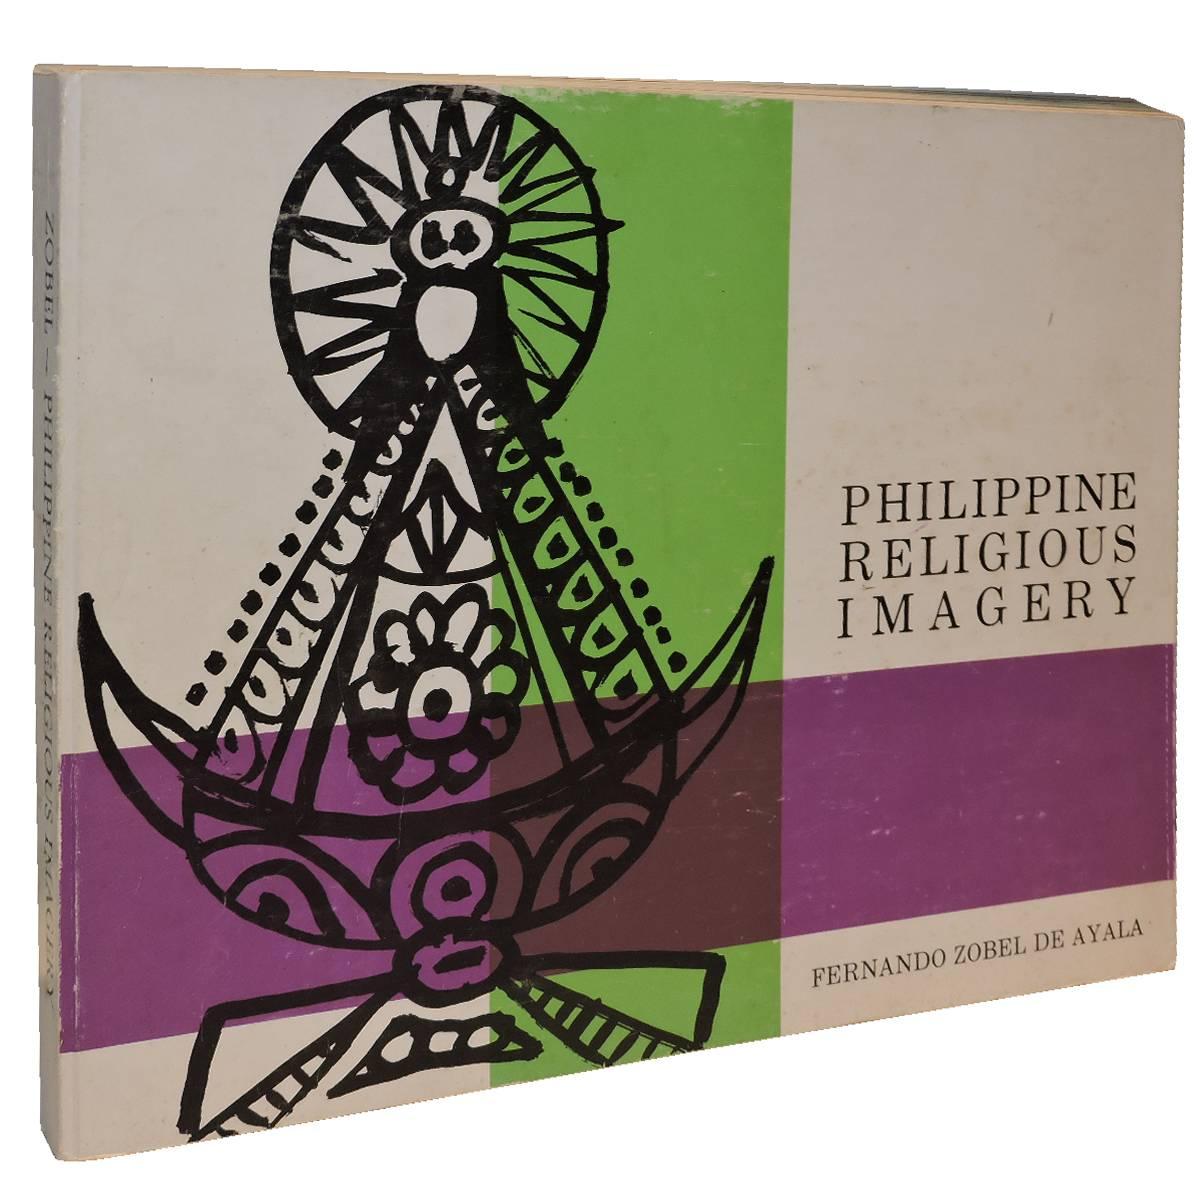 Philippine Religious Imagery, Fernando Zobel De Ayala - 1st Edition - 1963